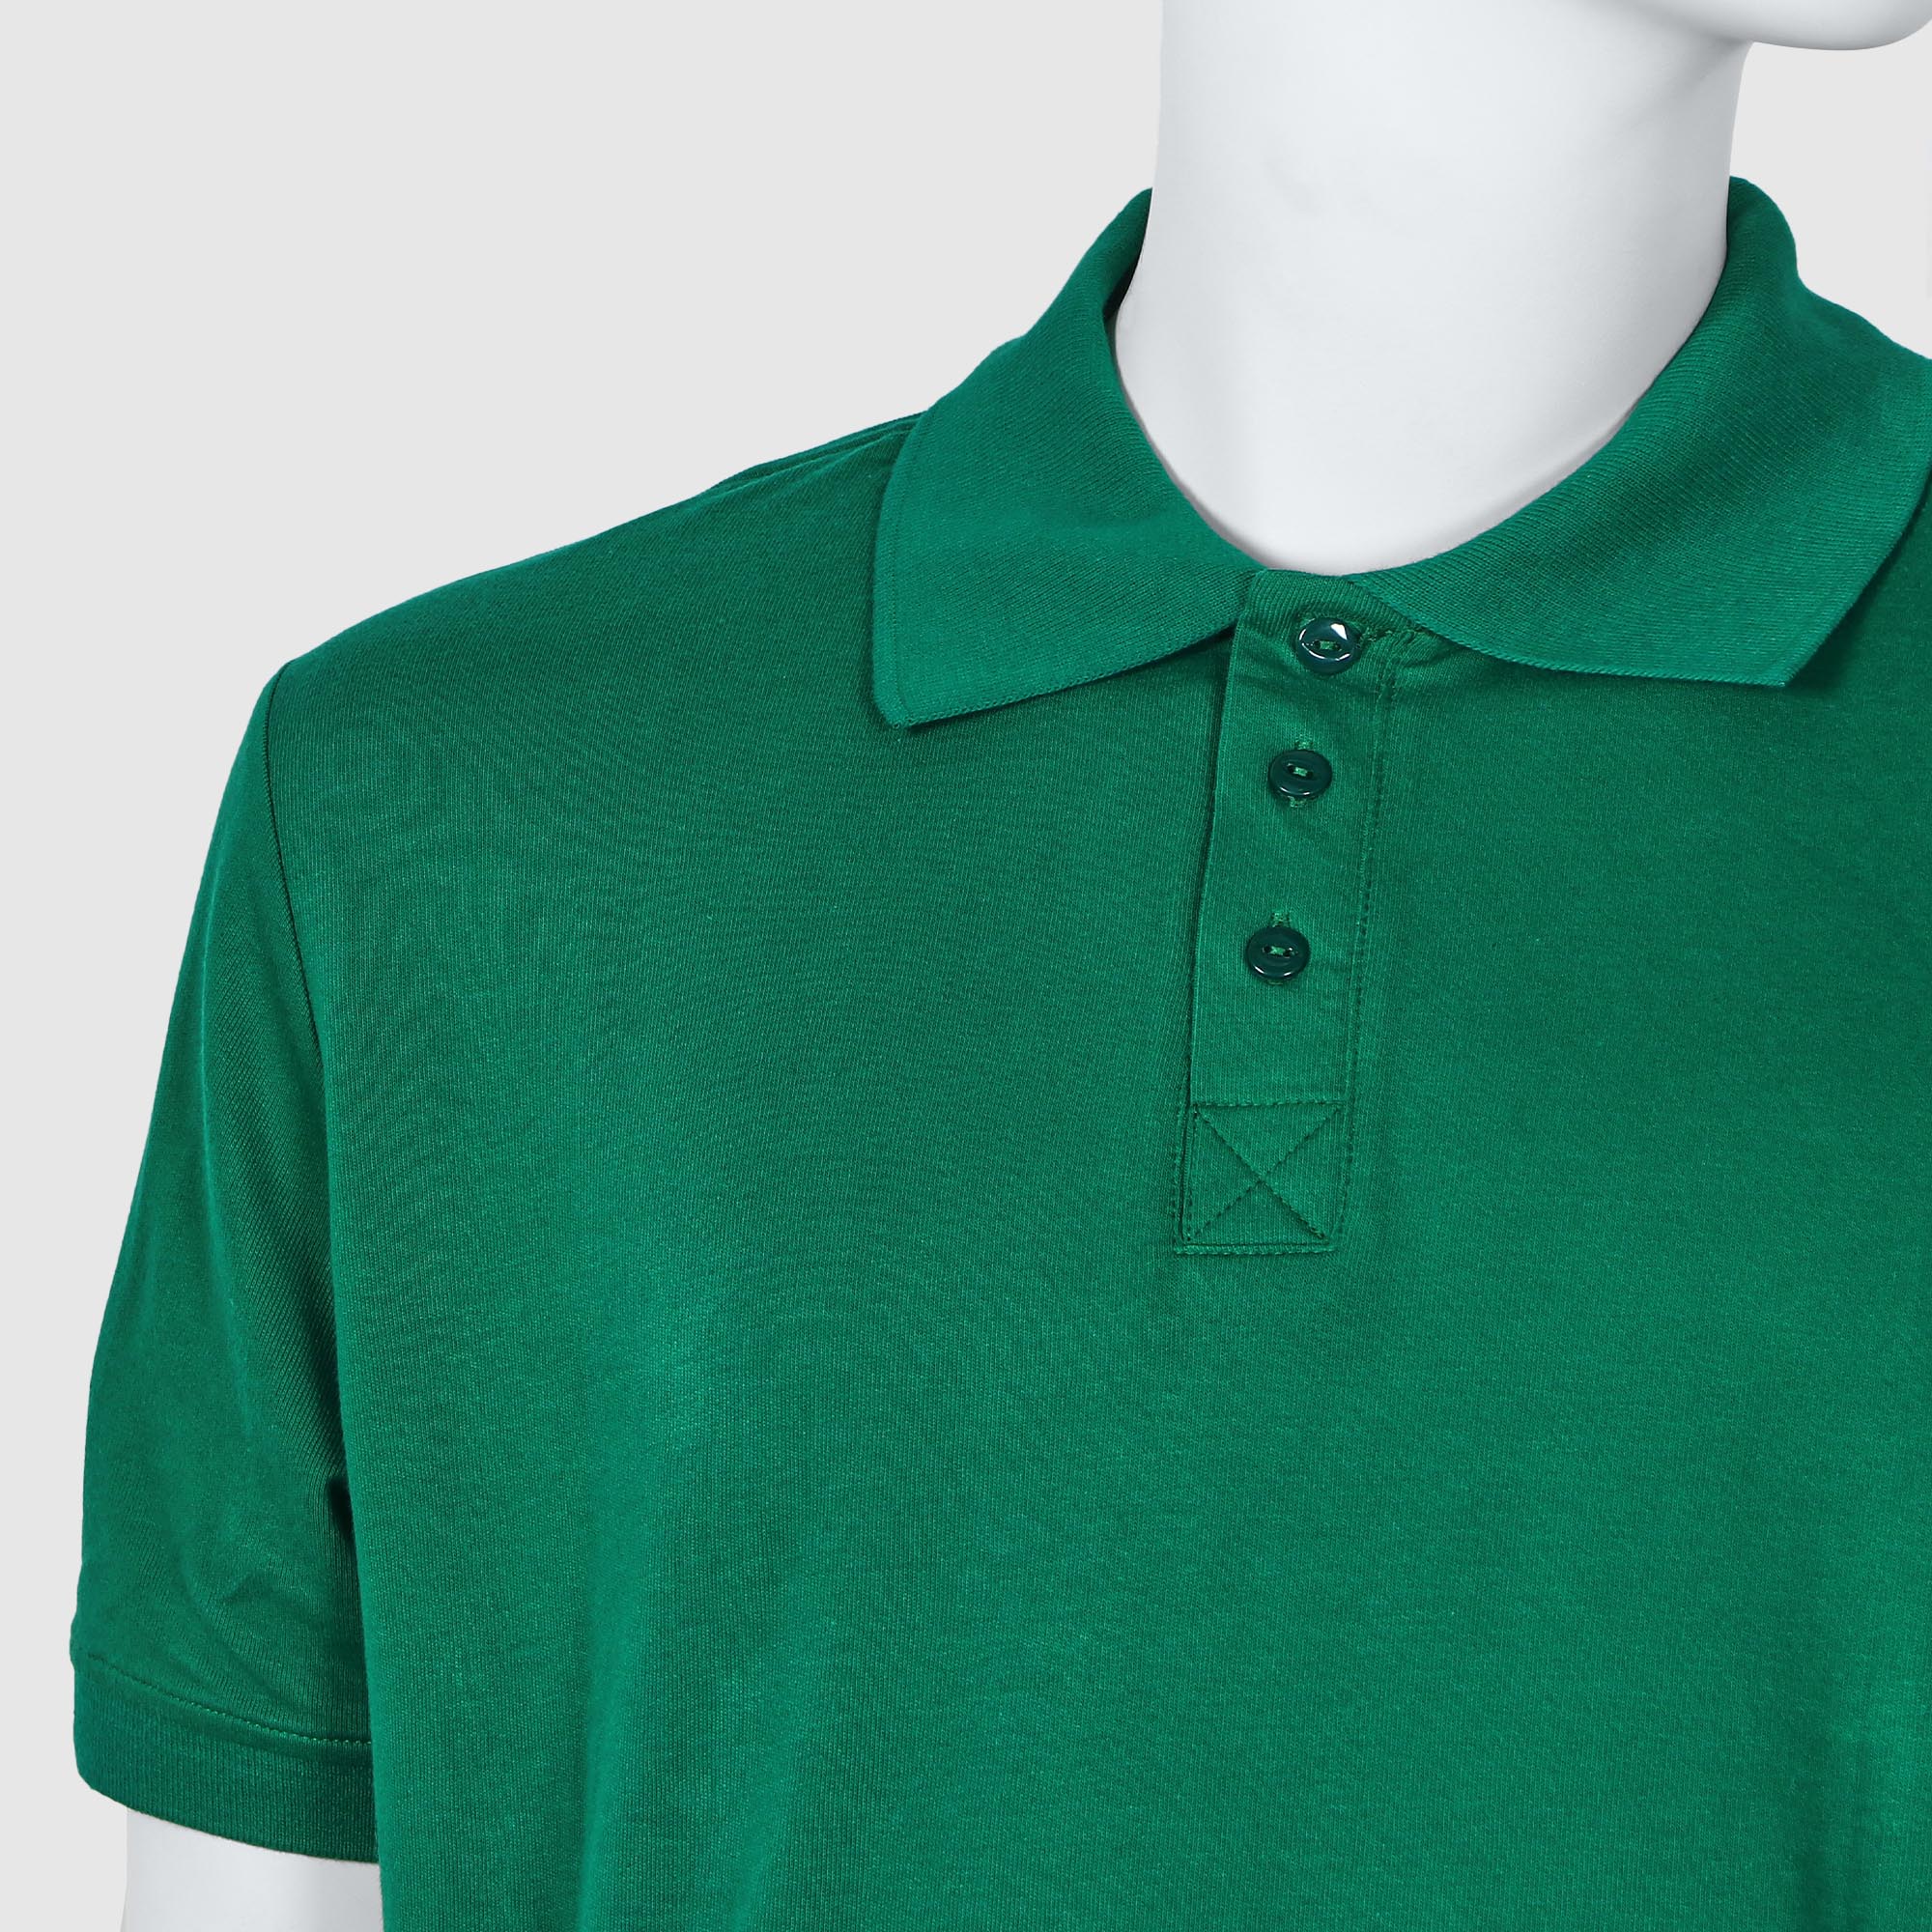 Мужская футболка-поло Diva Teks зелёная (DTD-09), цвет зелёный, размер 54-56 - фото 3